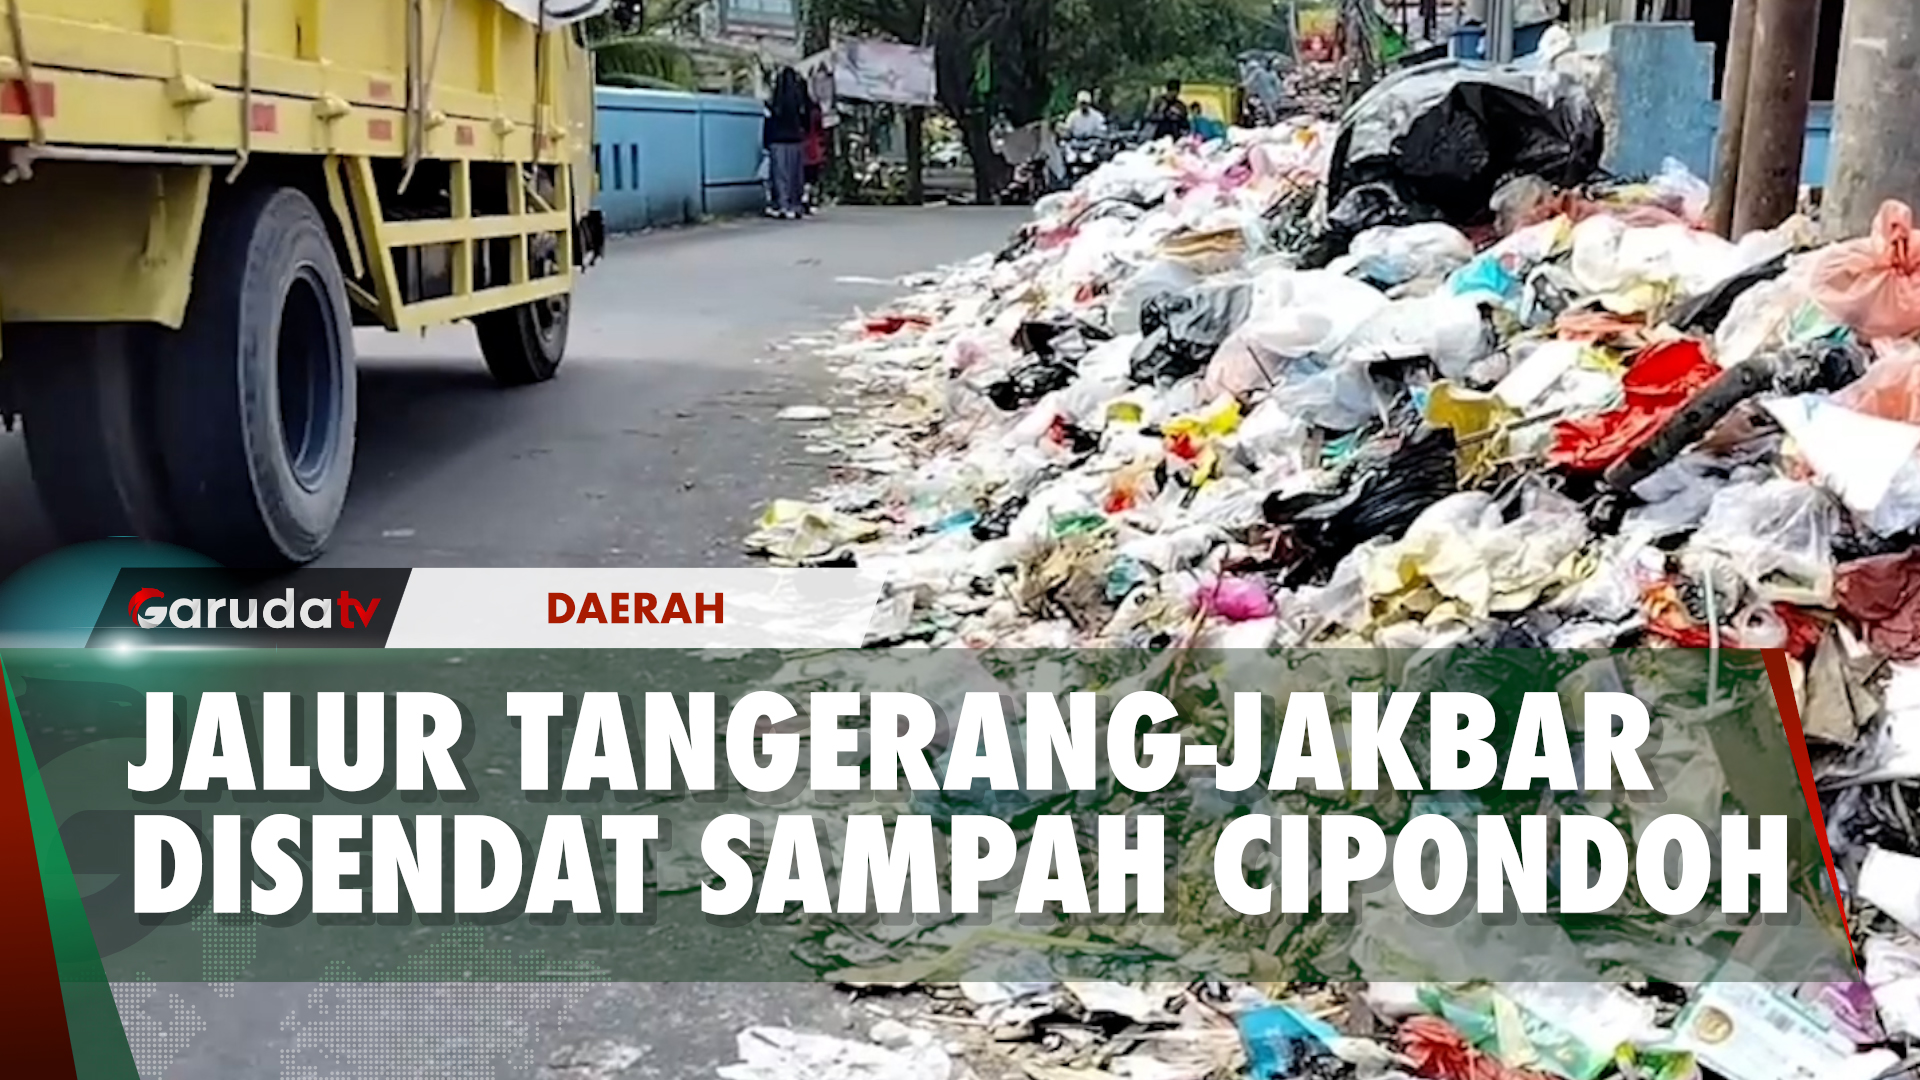 Ampun Dah, Gunungan Sampah di Cipondoh Tutup Jalur Tangerang Jakarta!